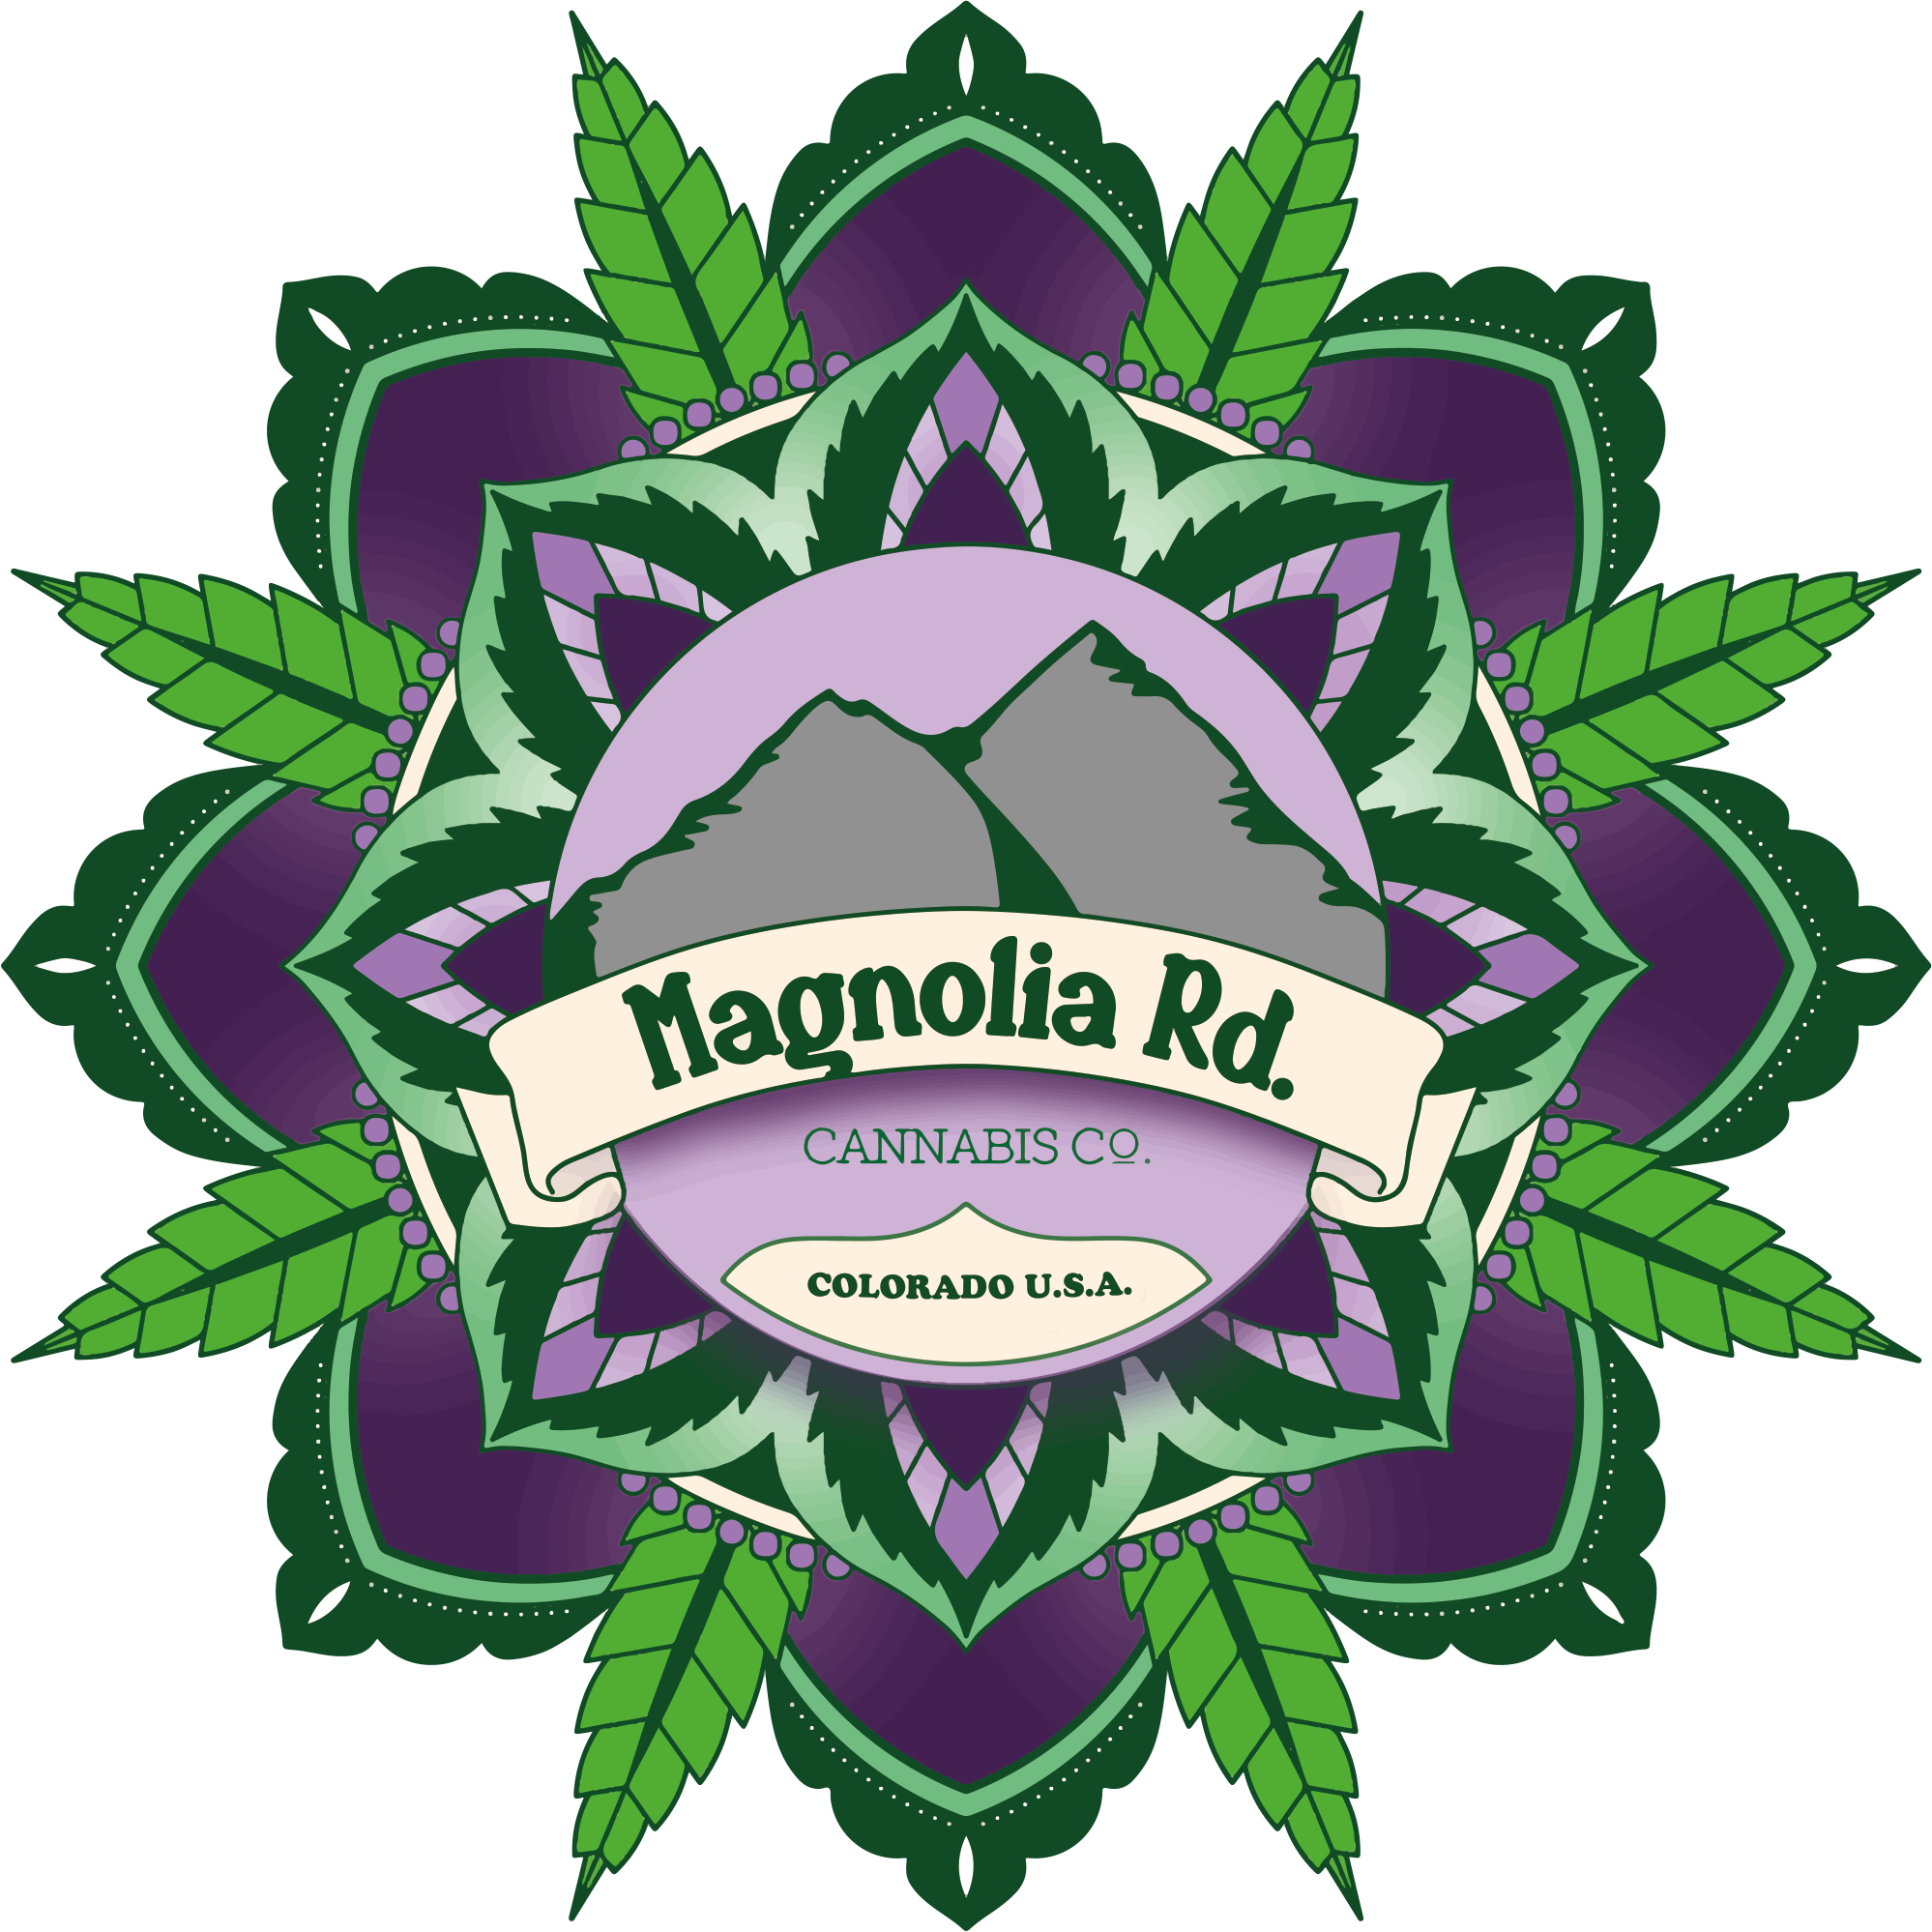 Magnolia Road Cannabis Co. - Log Lane Village